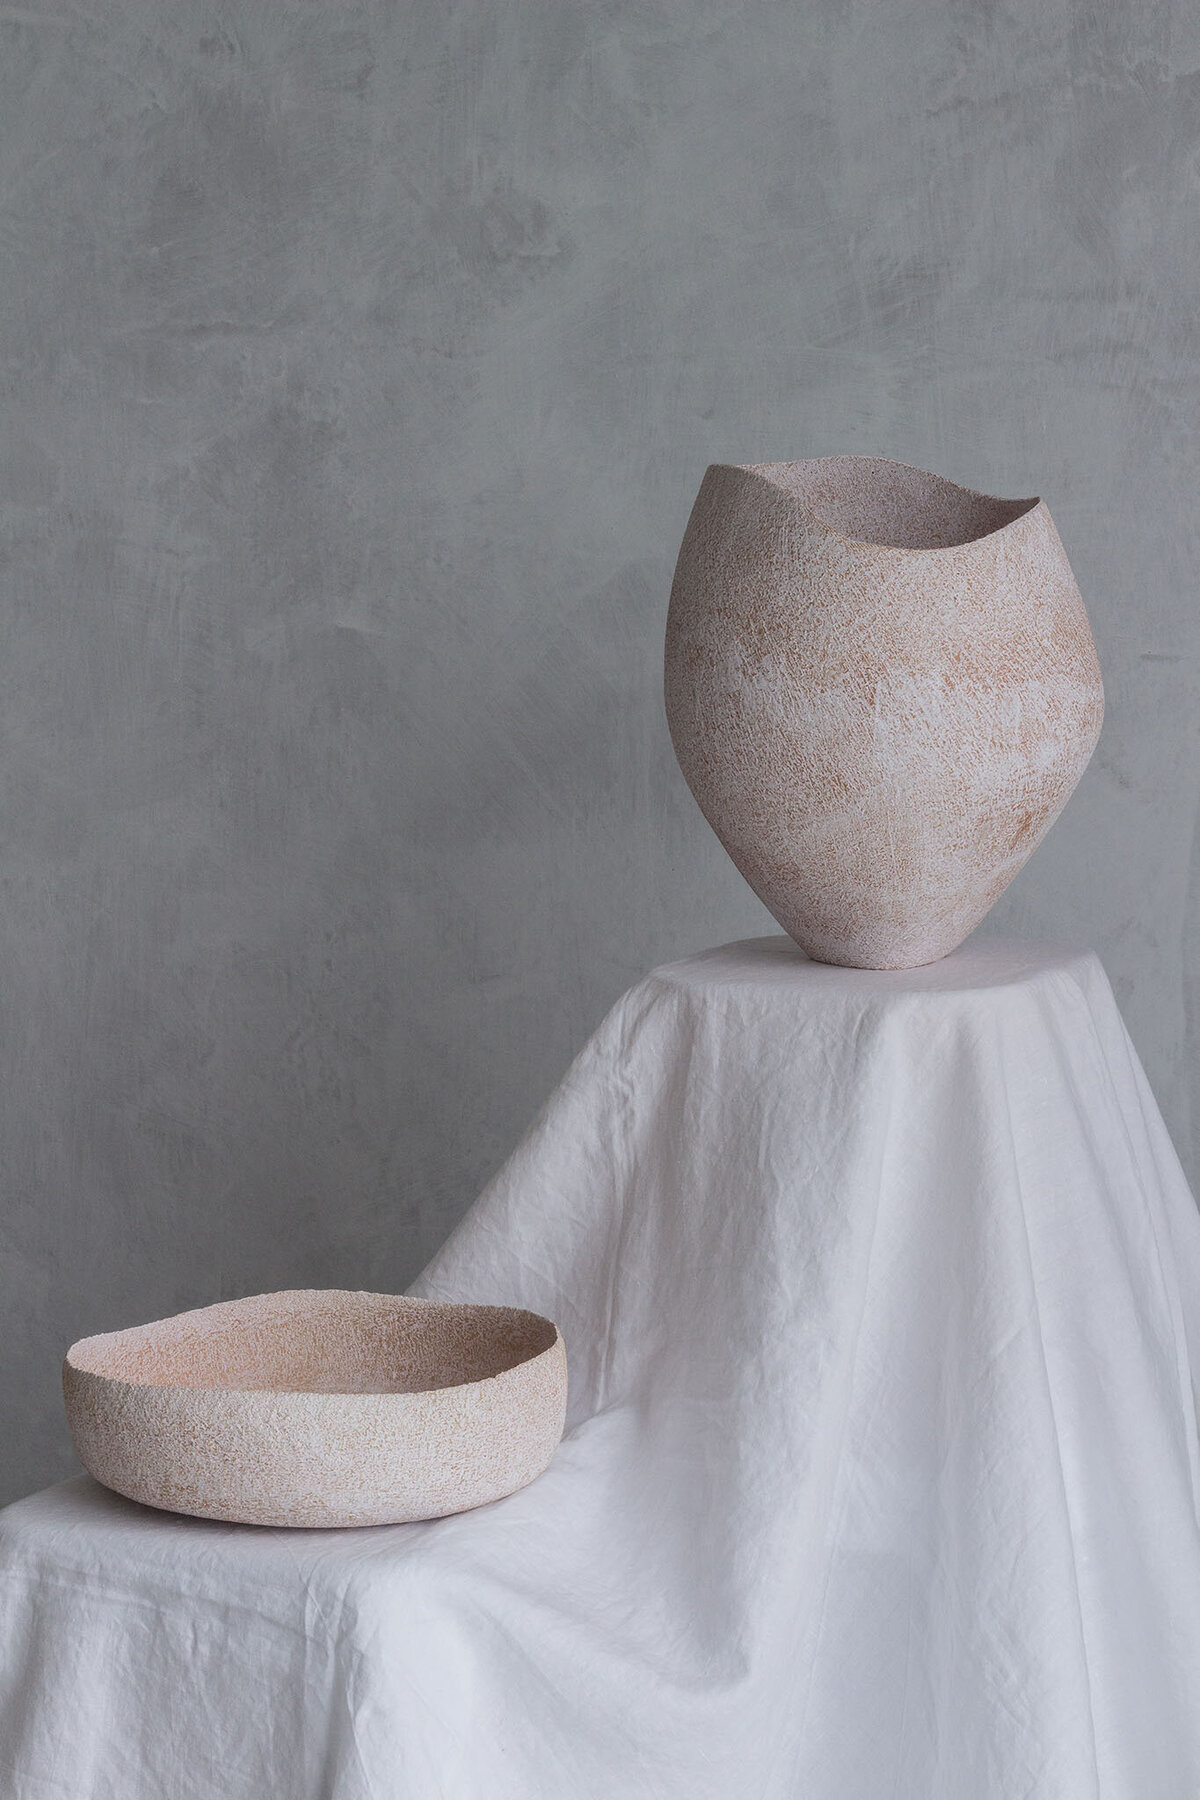 Yasha-Butler-Ceramic-Lithic-Collection-Pergamon-01-2022-15-2048px - Copy